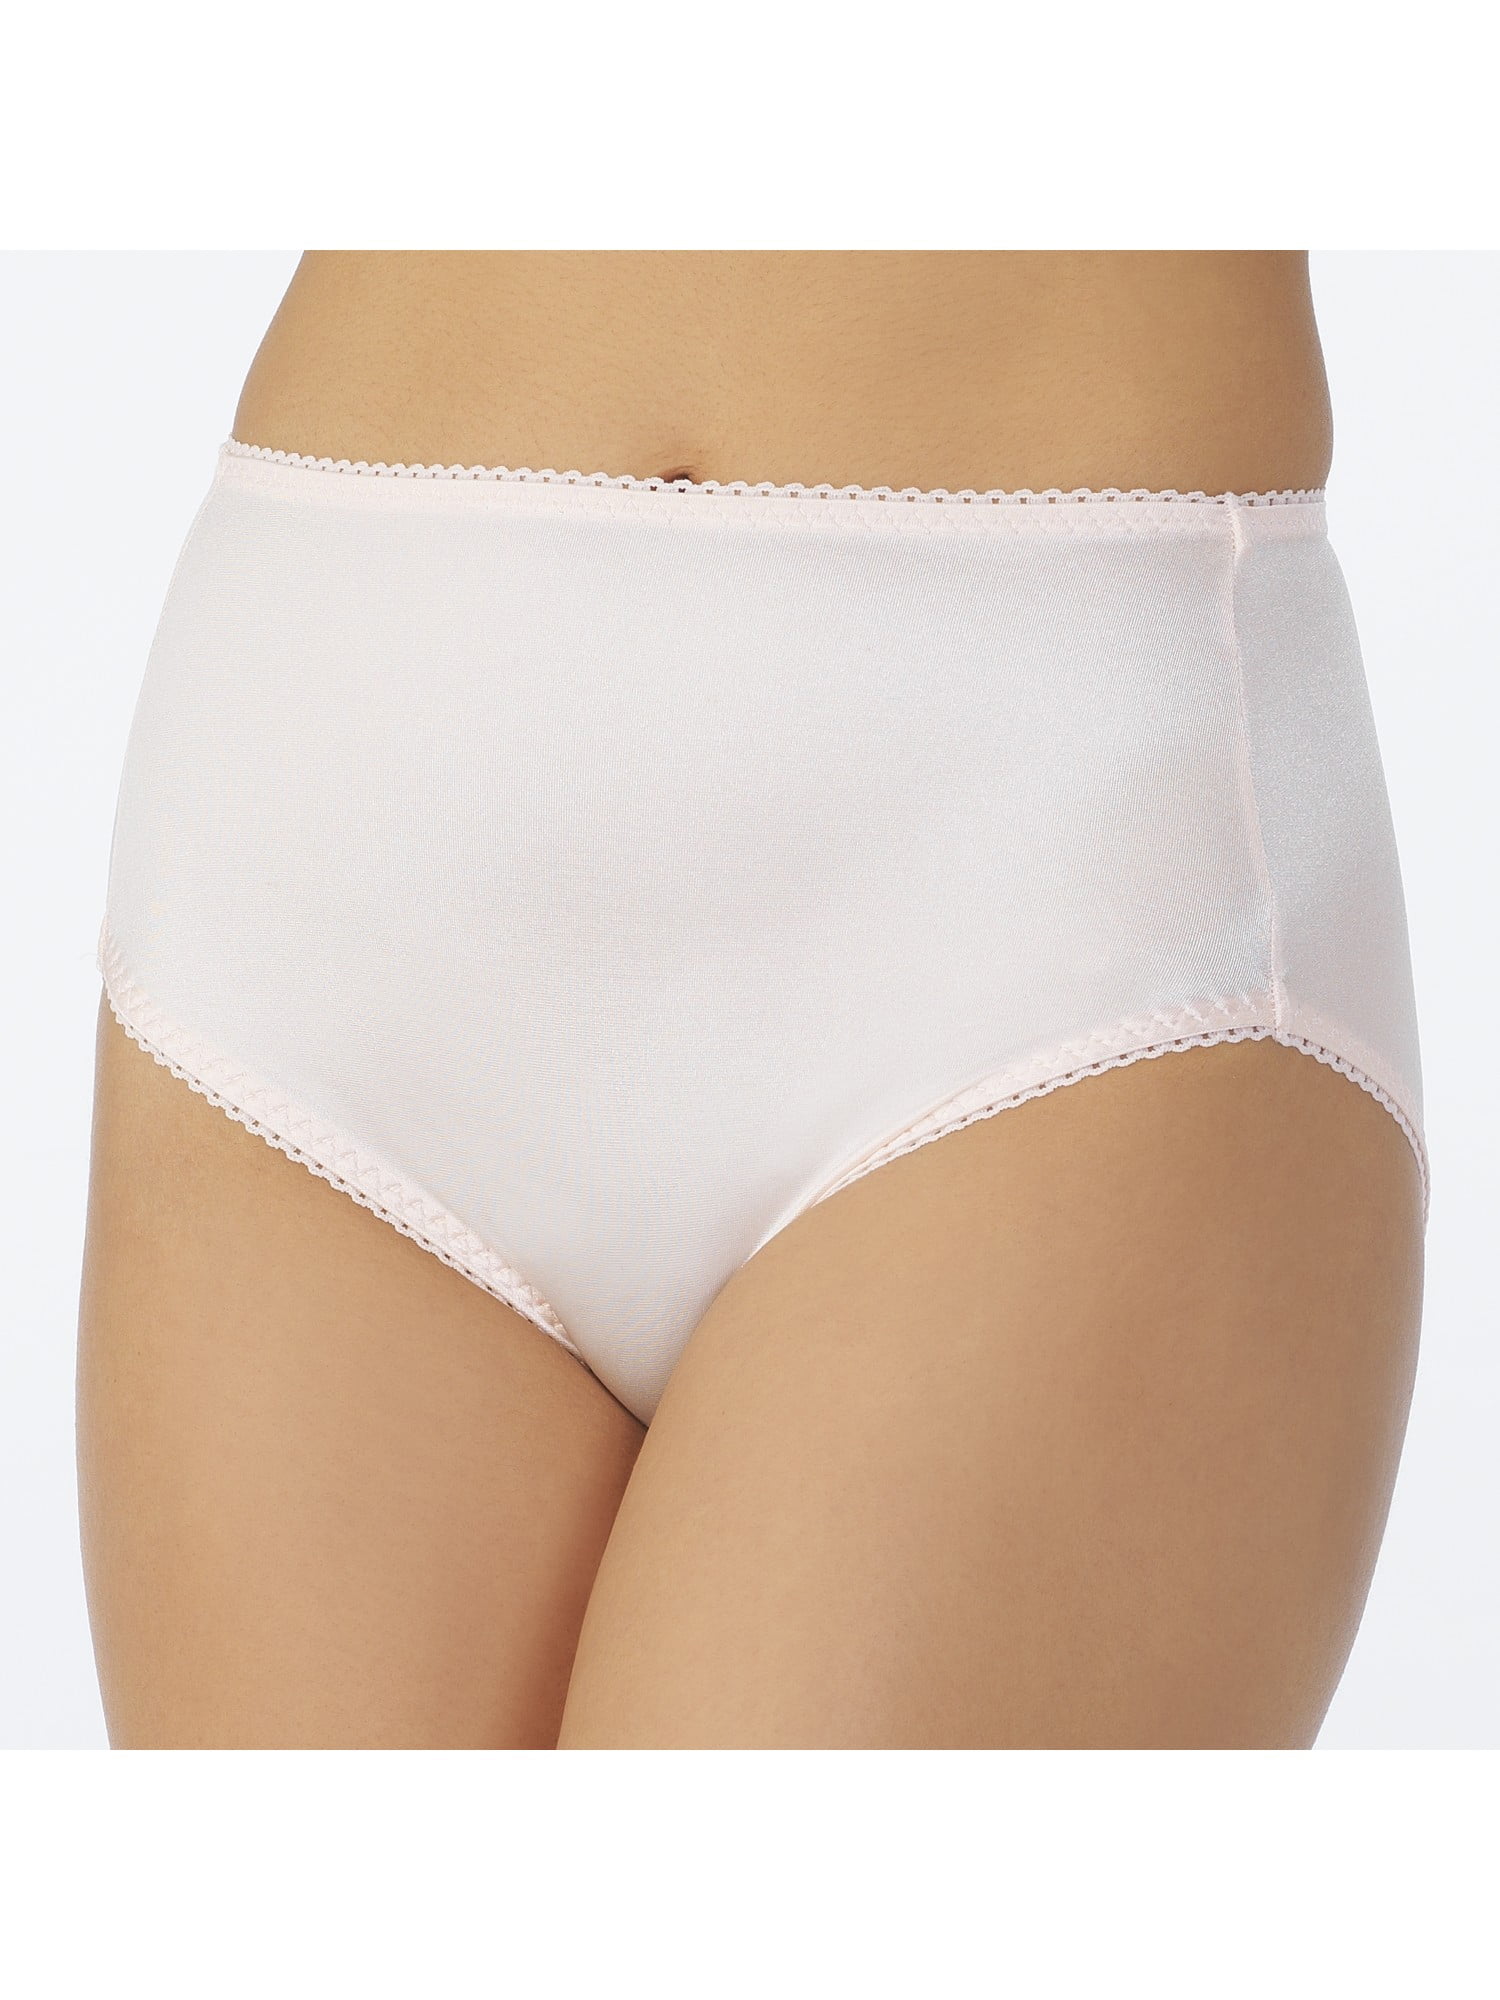 Panties White Smoothing Hi Cut Brief Women Underwear, Size: Medium at Rs  70/piece in Ghaziabad